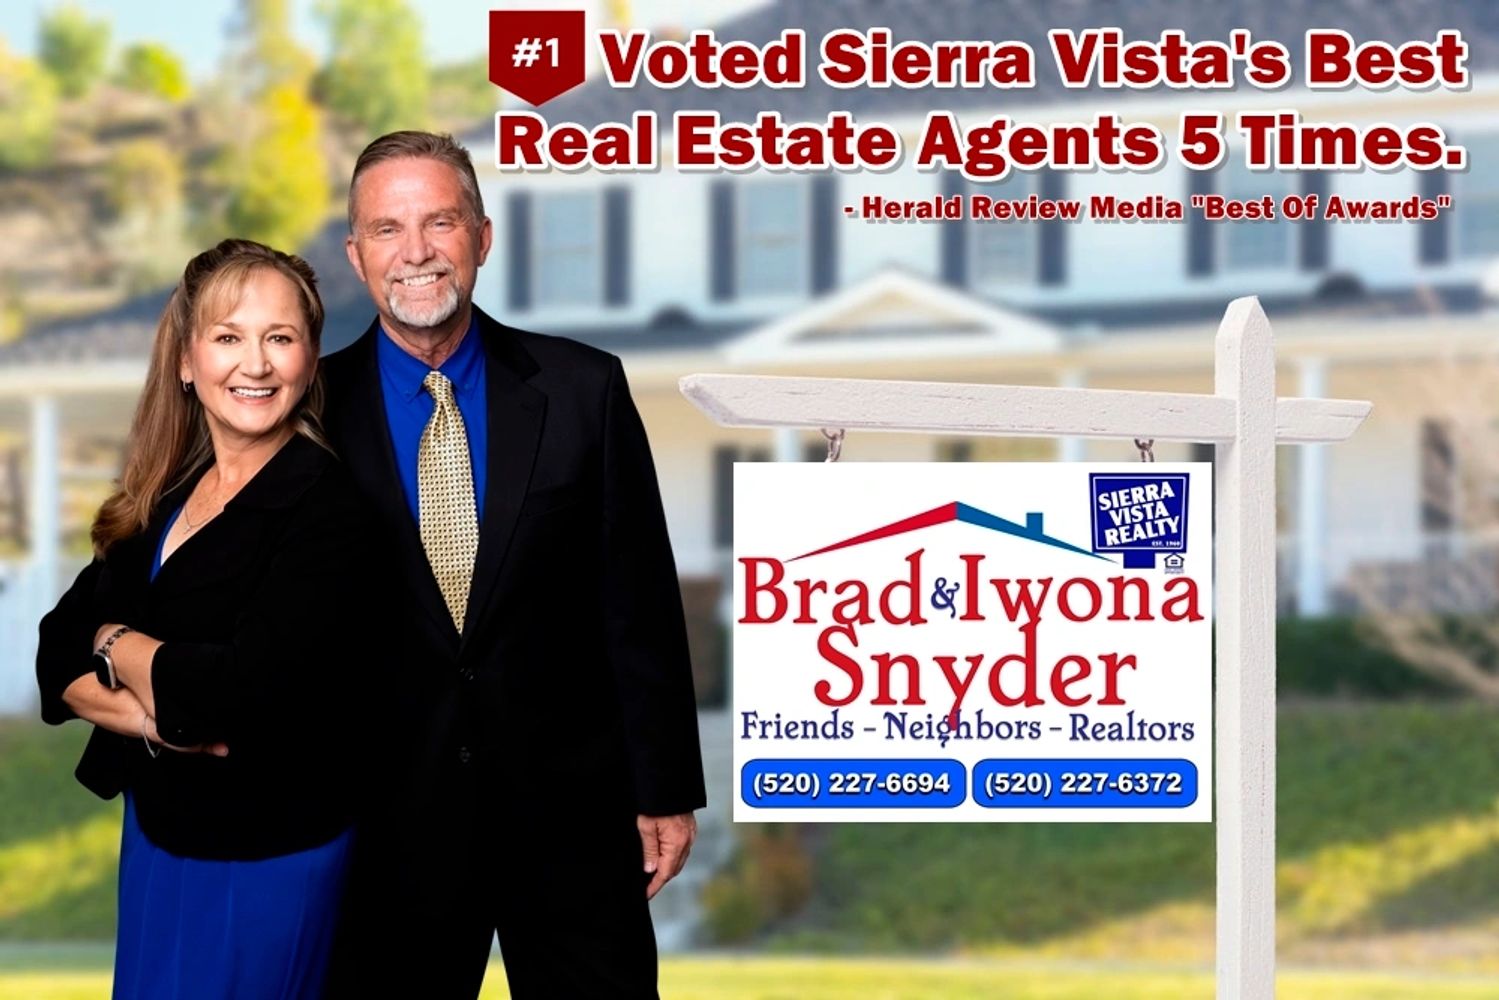 Brad & Iwona Snyder Voted "Best Real Estate Agents" Five Times in Best of Sierra Vista Awards!!